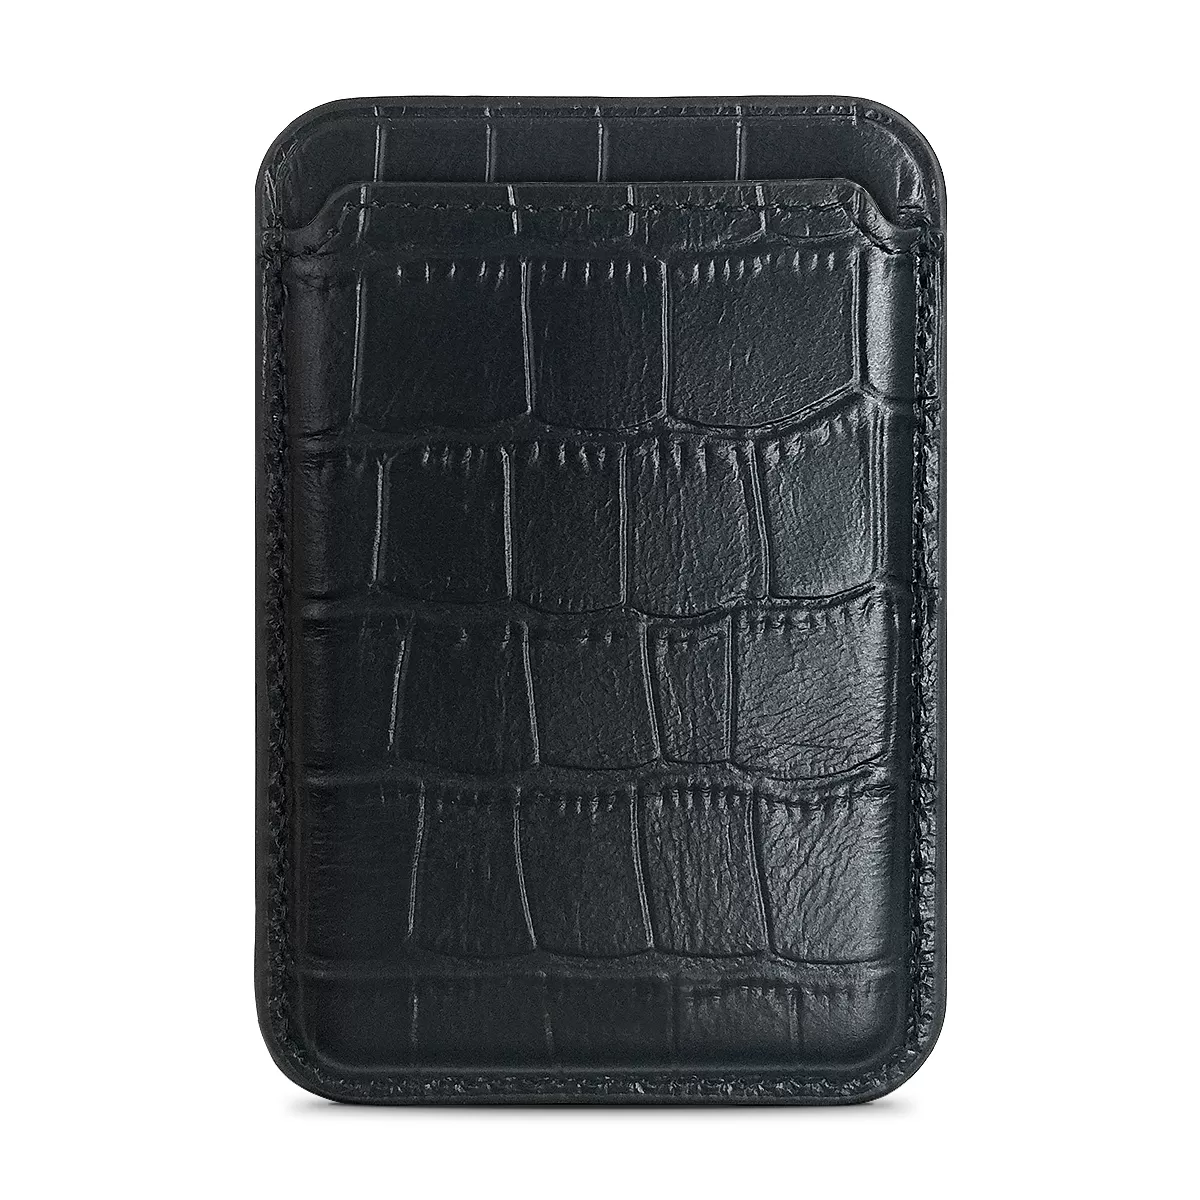 Sinco crocodile leather magsafe card holder